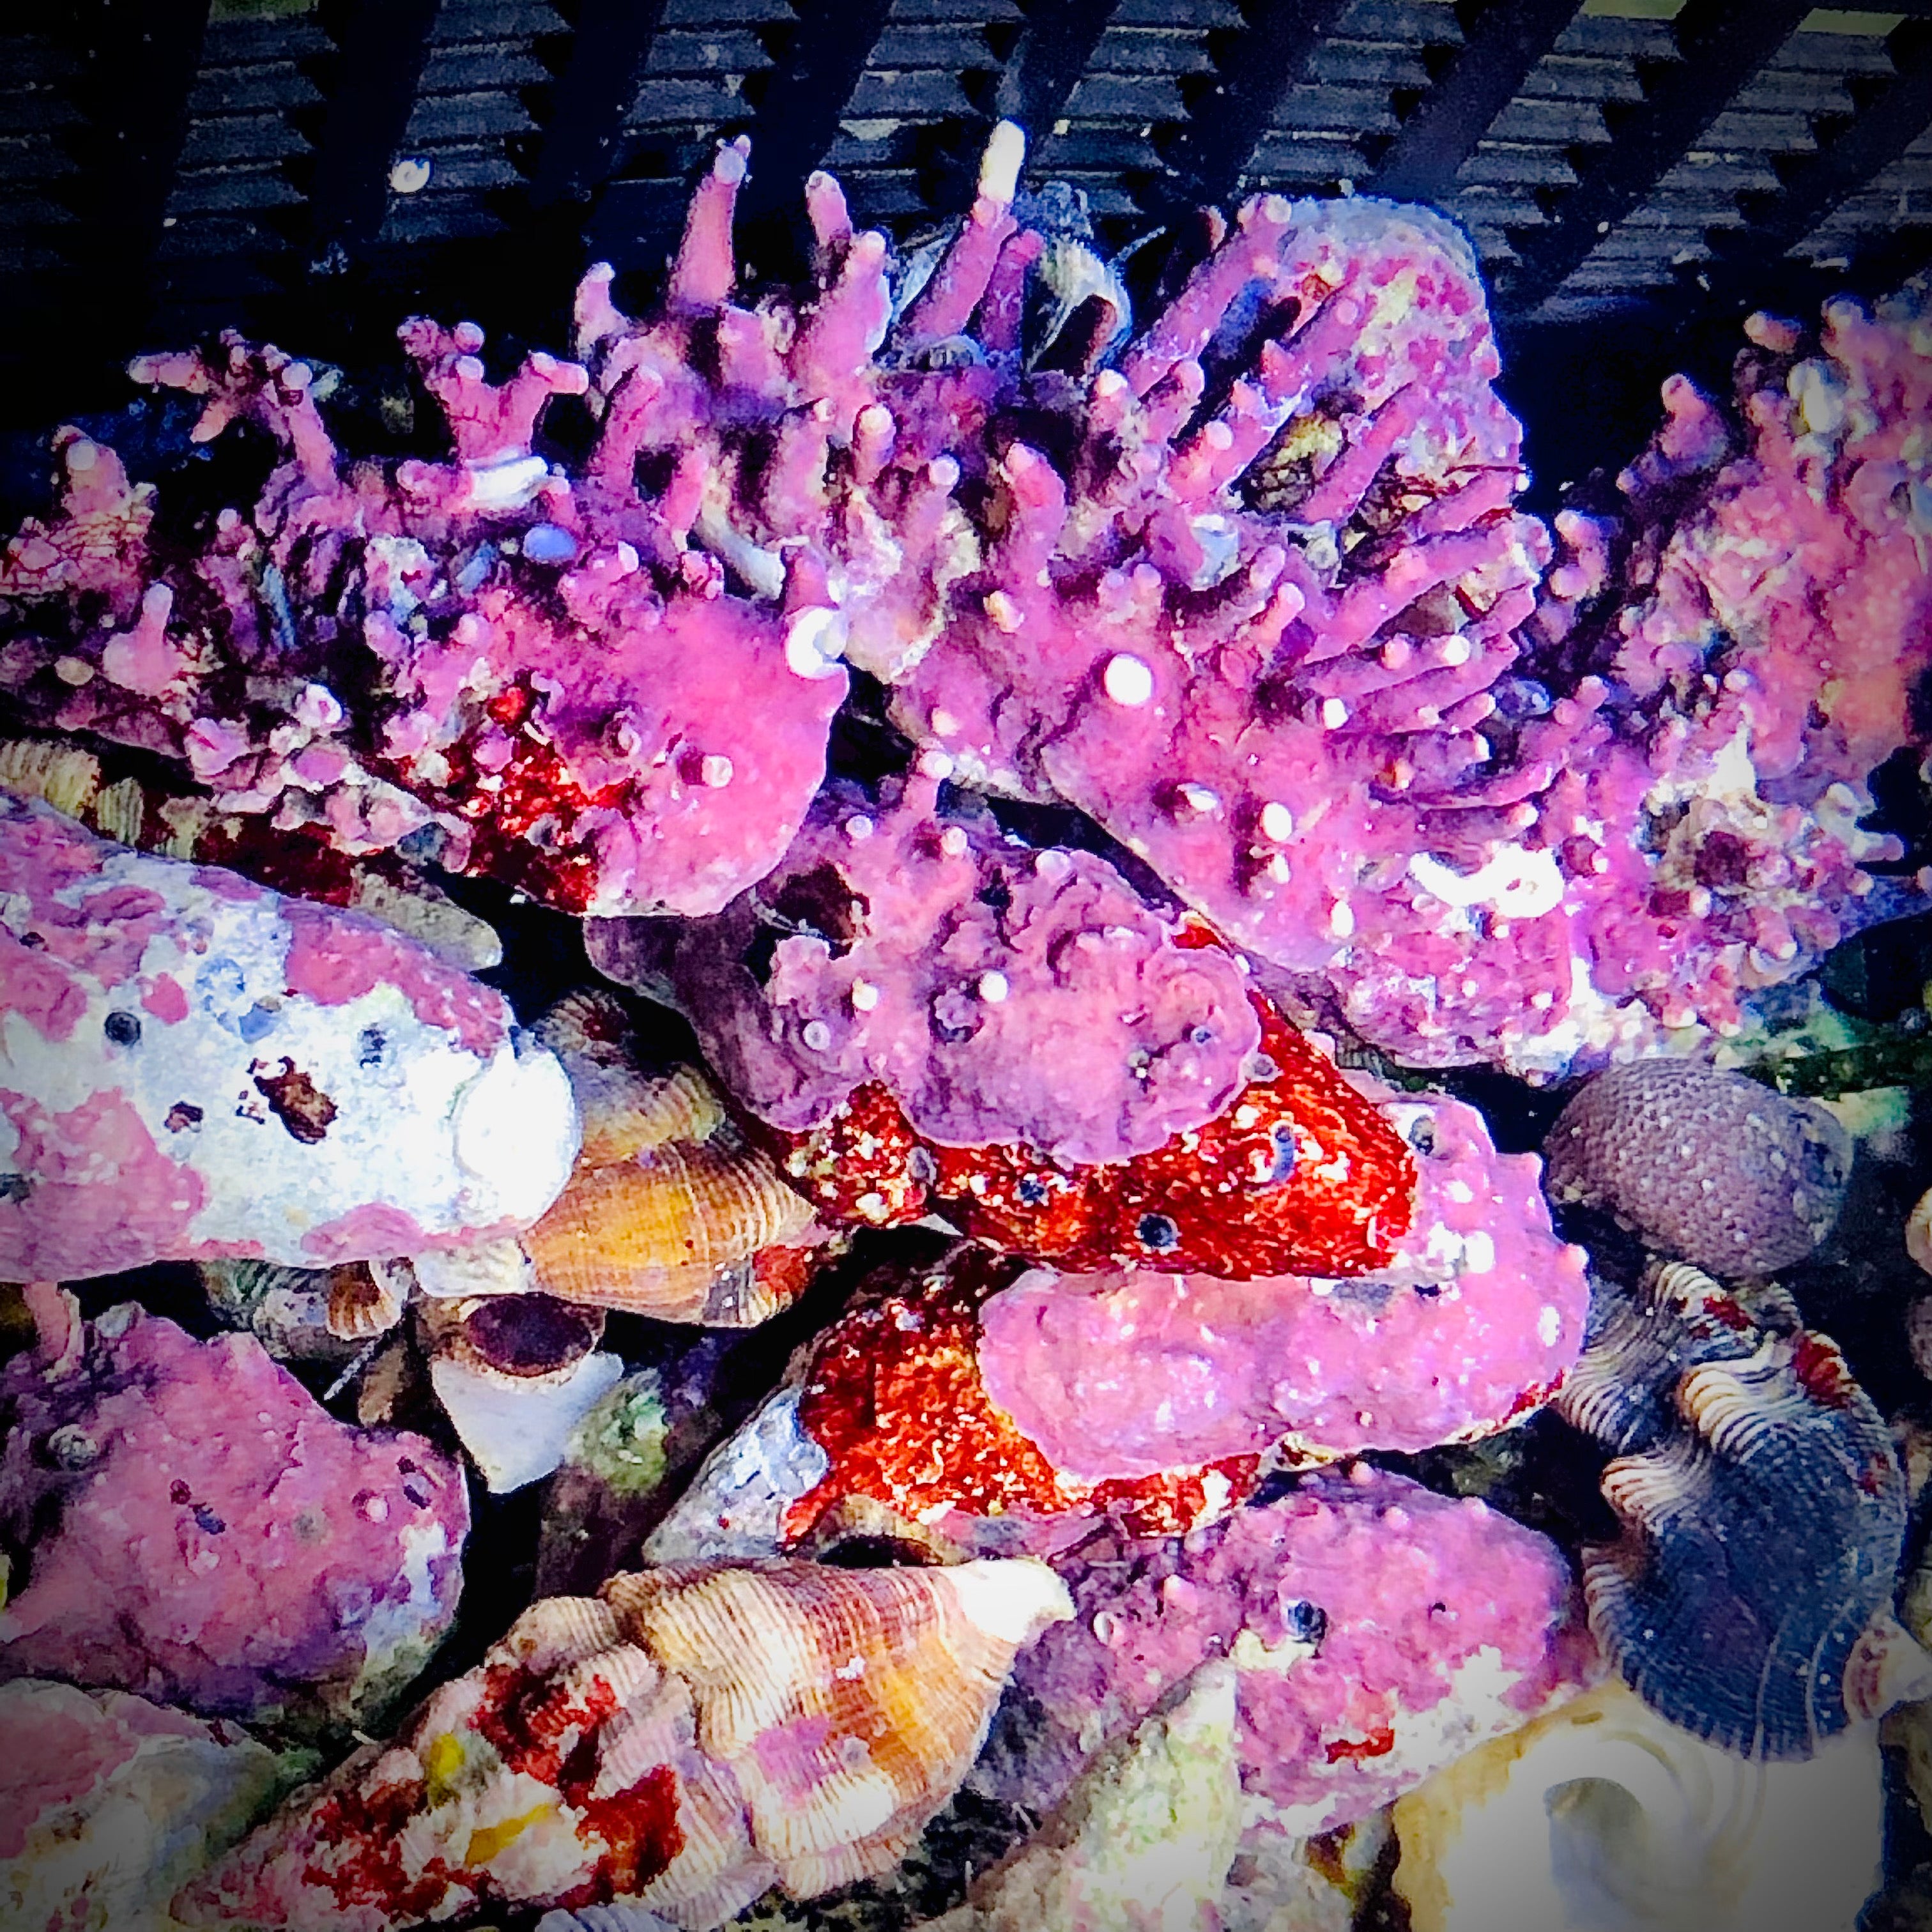 Coralline Covered Cerith Snail-Eat Algae and Detritous (Popular)